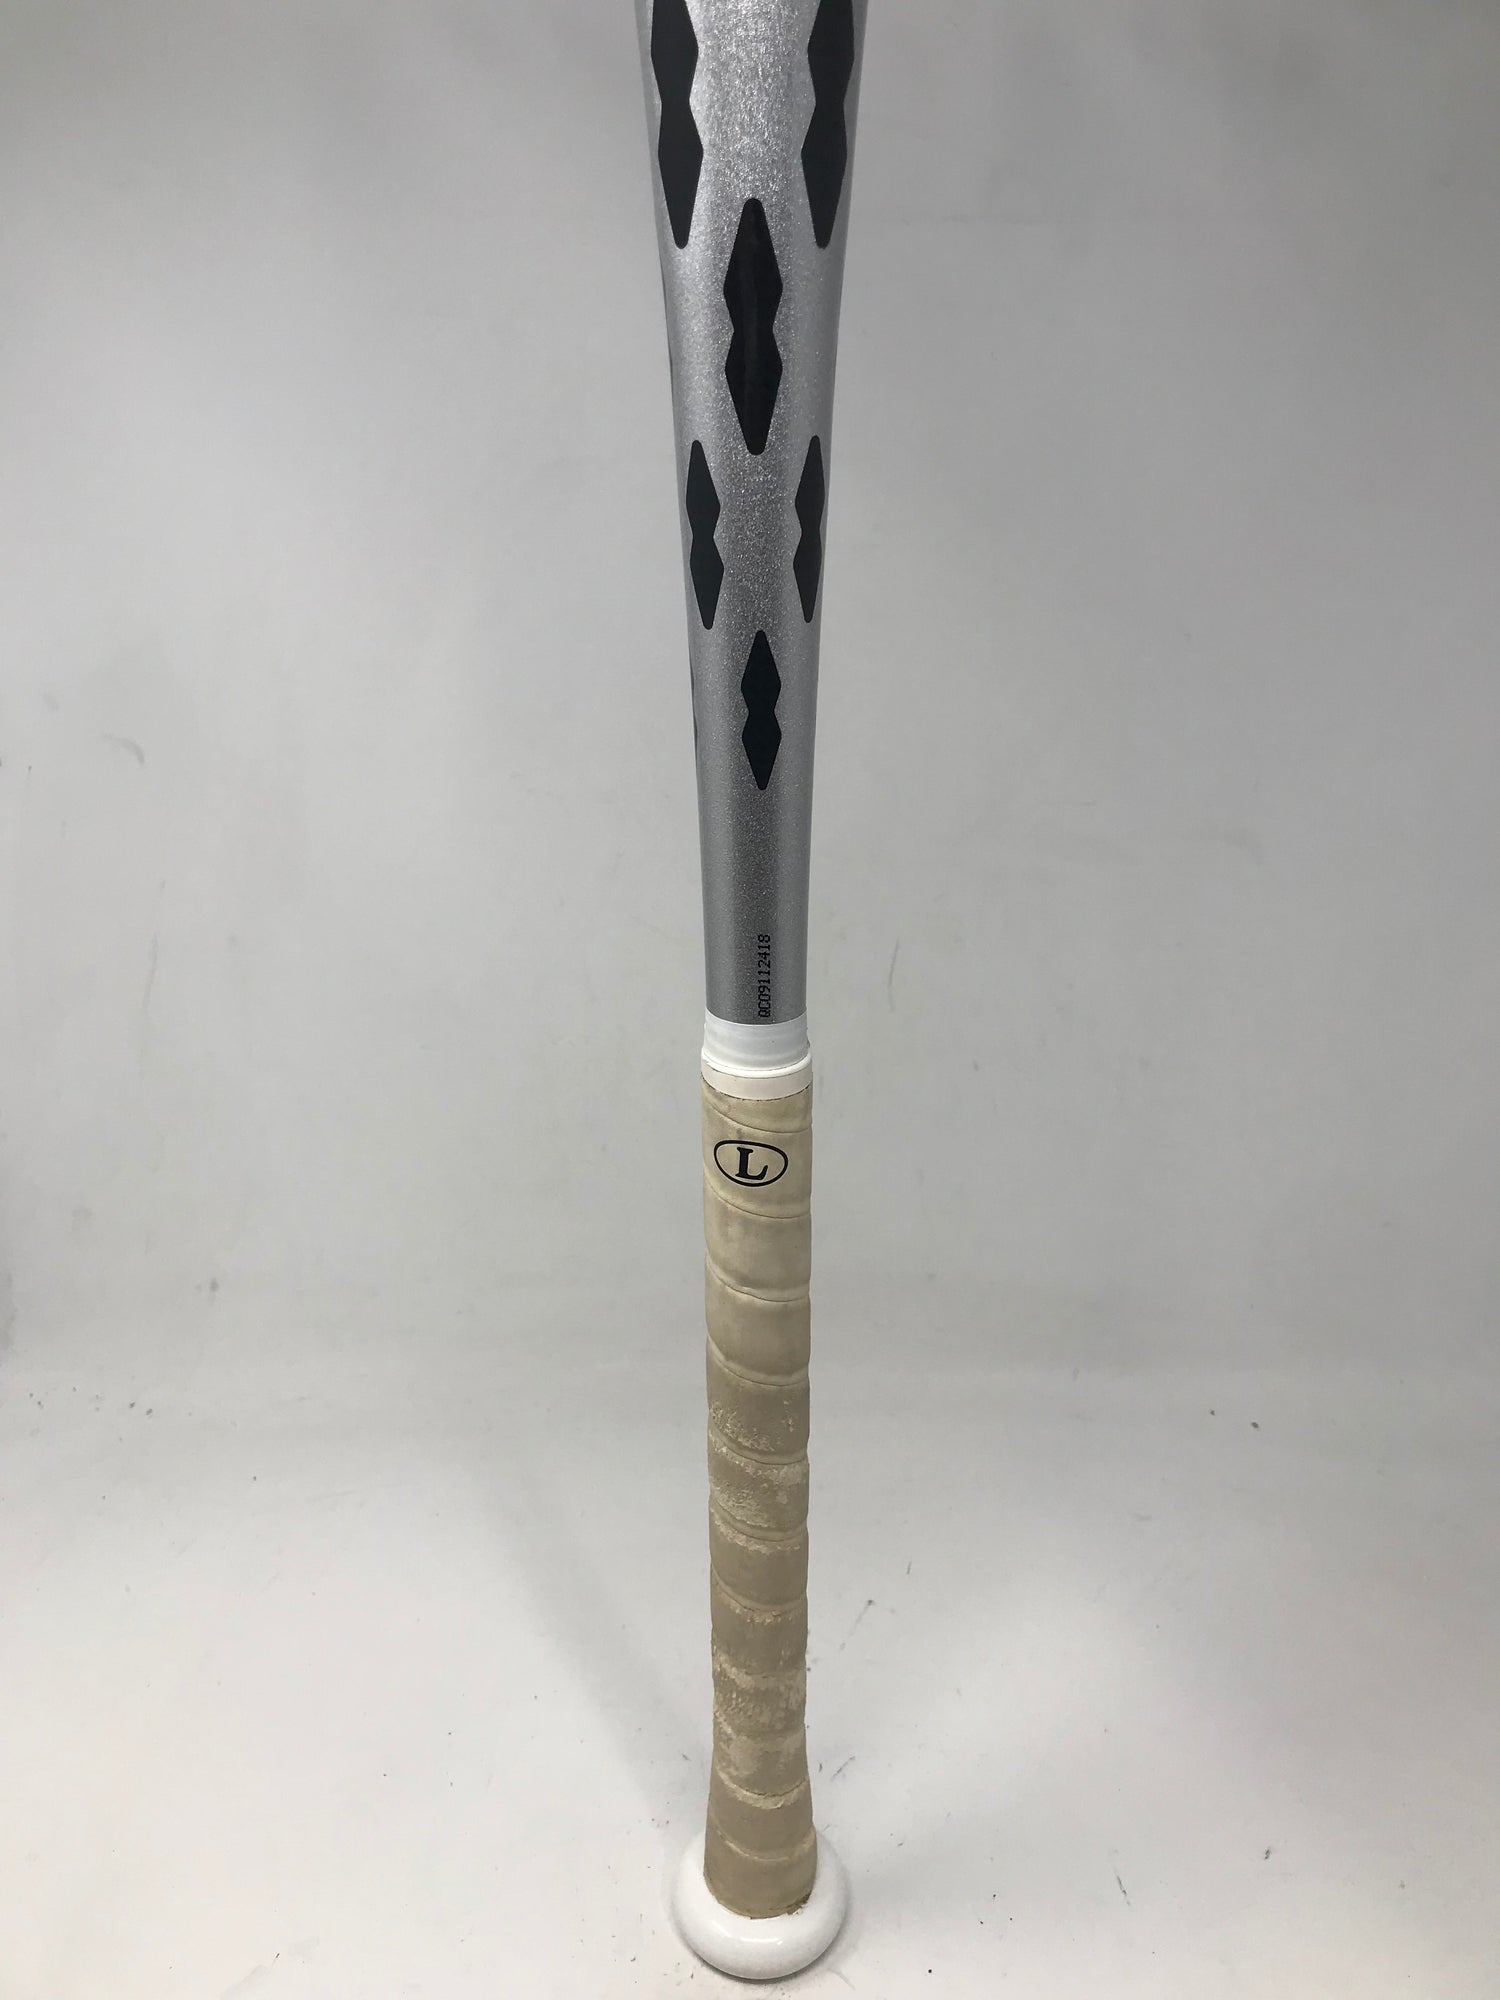 Louisville Slugger (-3) 31 oz 34 Bat